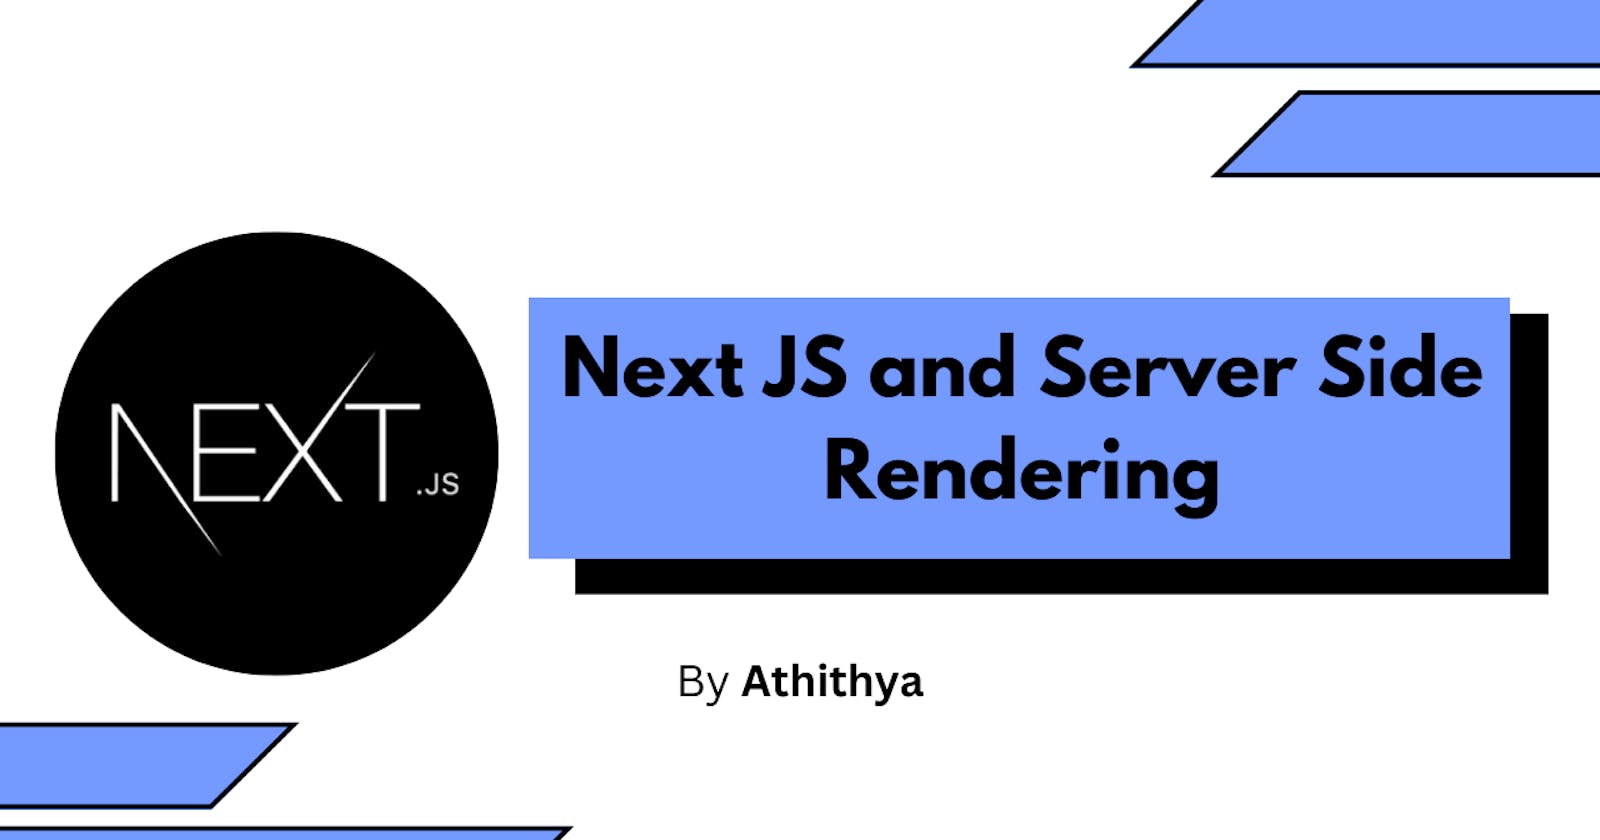 Next JS and Server Side Rendering